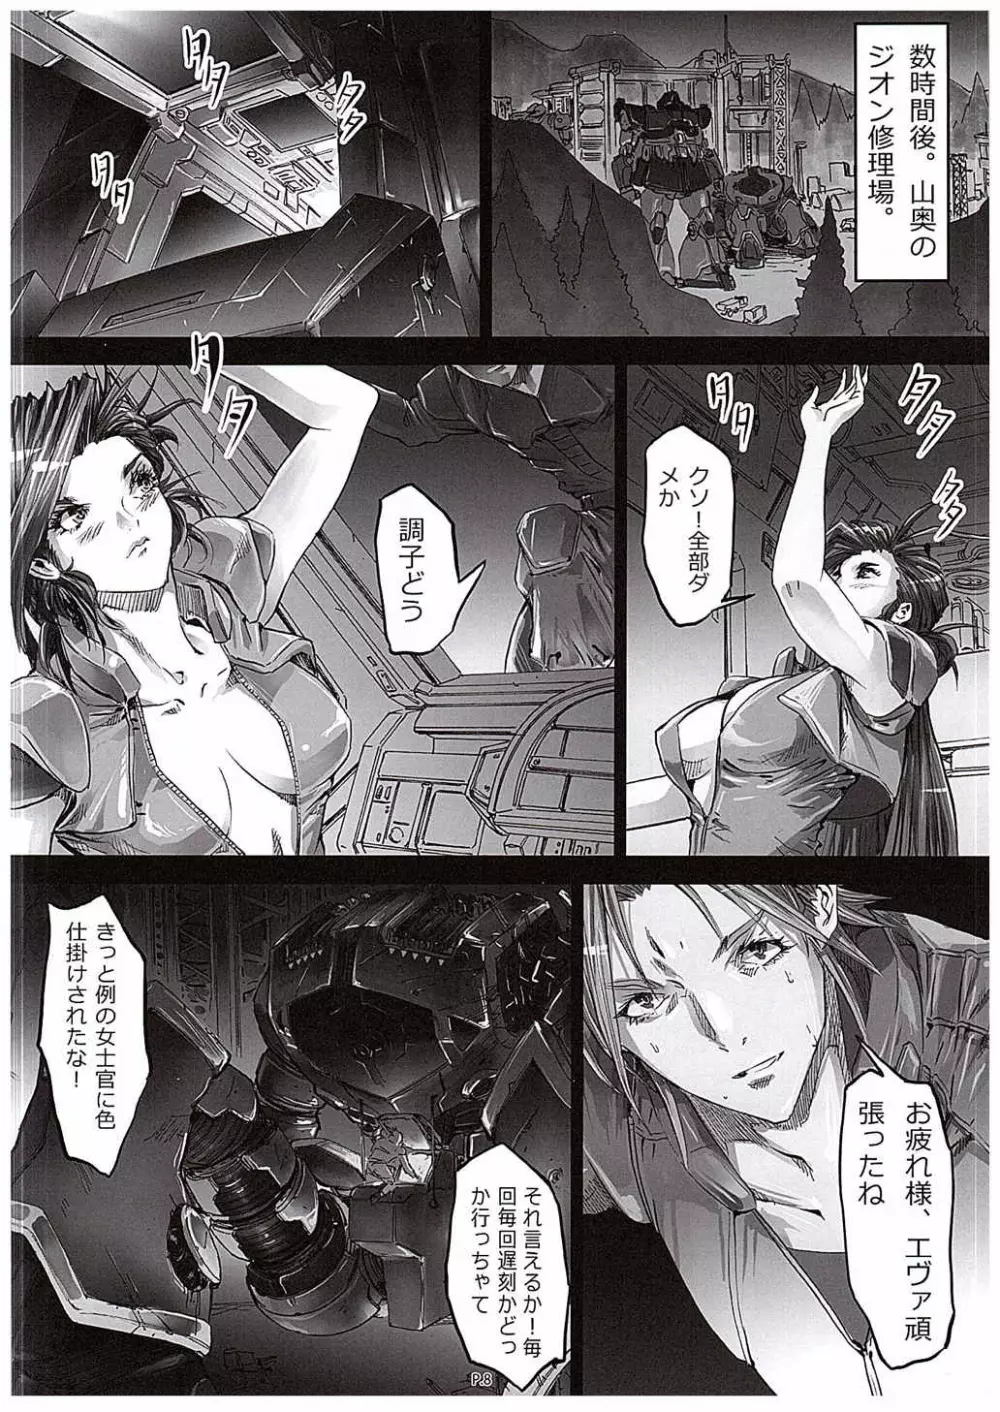 Zeon Saga Vanishing Knight - page9